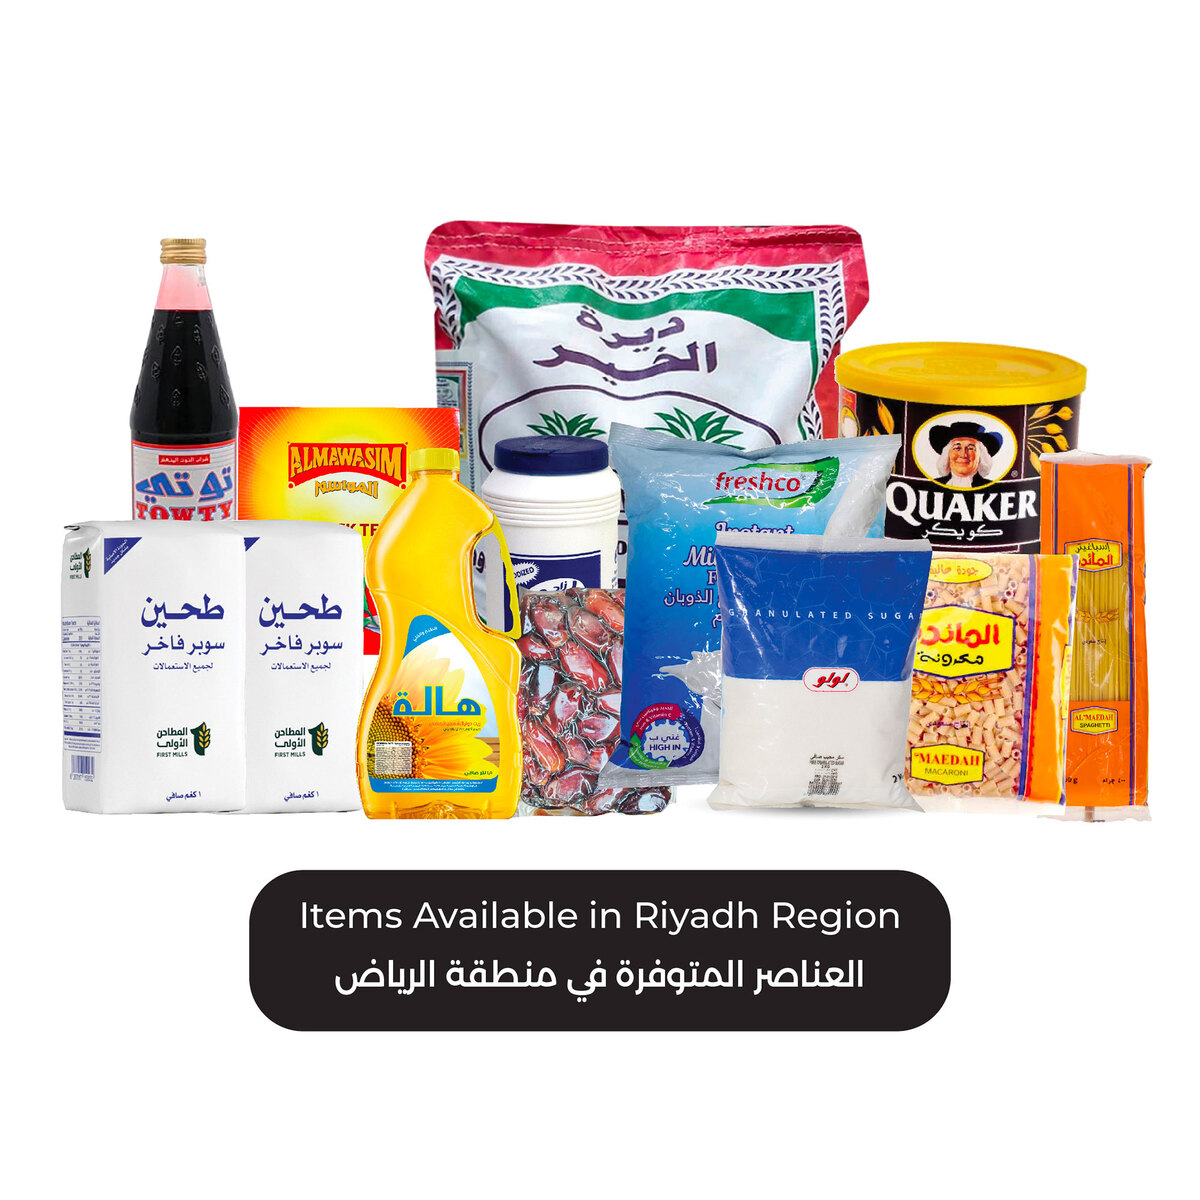 LuLu Ramadan Kit 99 ( Product May Vary According to The Region, Refer Product Summary)